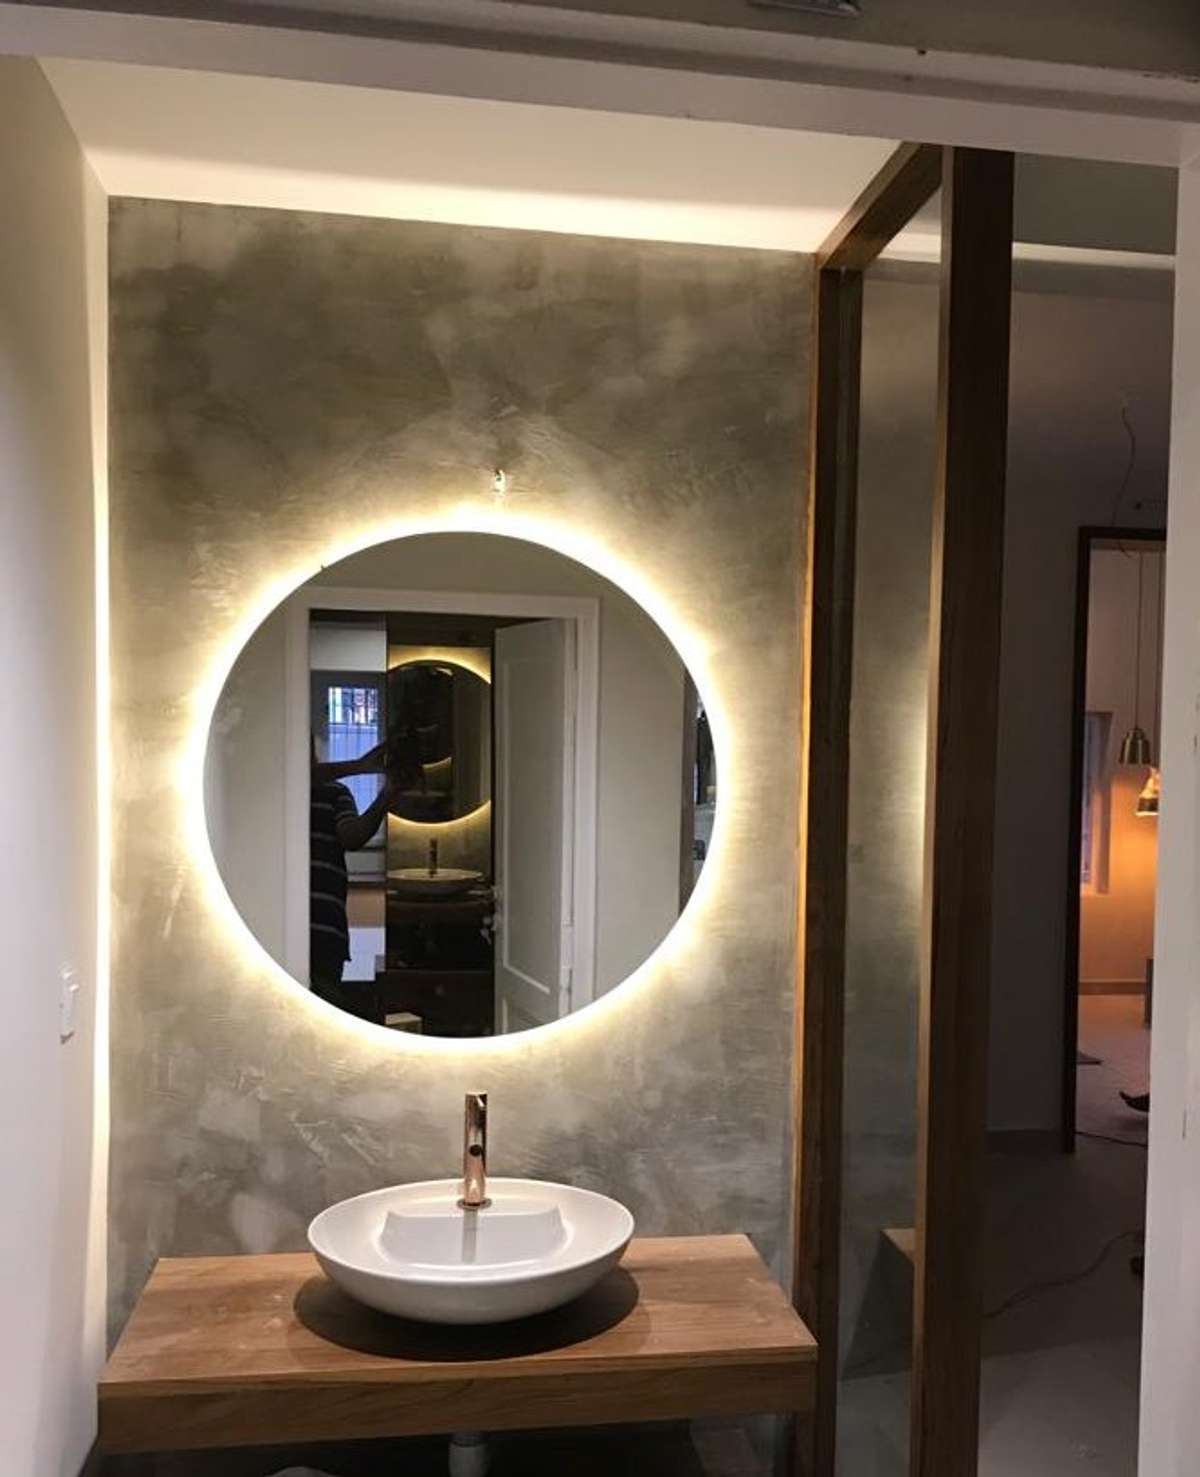 LED Mirror - Fully customised

36X36 inches 5mm Saint Gobain mirror with LED light

Installed @ Dining Hall wash basin counter wall 

 #LED_Sensor_Mirror  #ledmirrors  #decorative  #InteriorDesigner  #mirrorwall  #GlassMirror